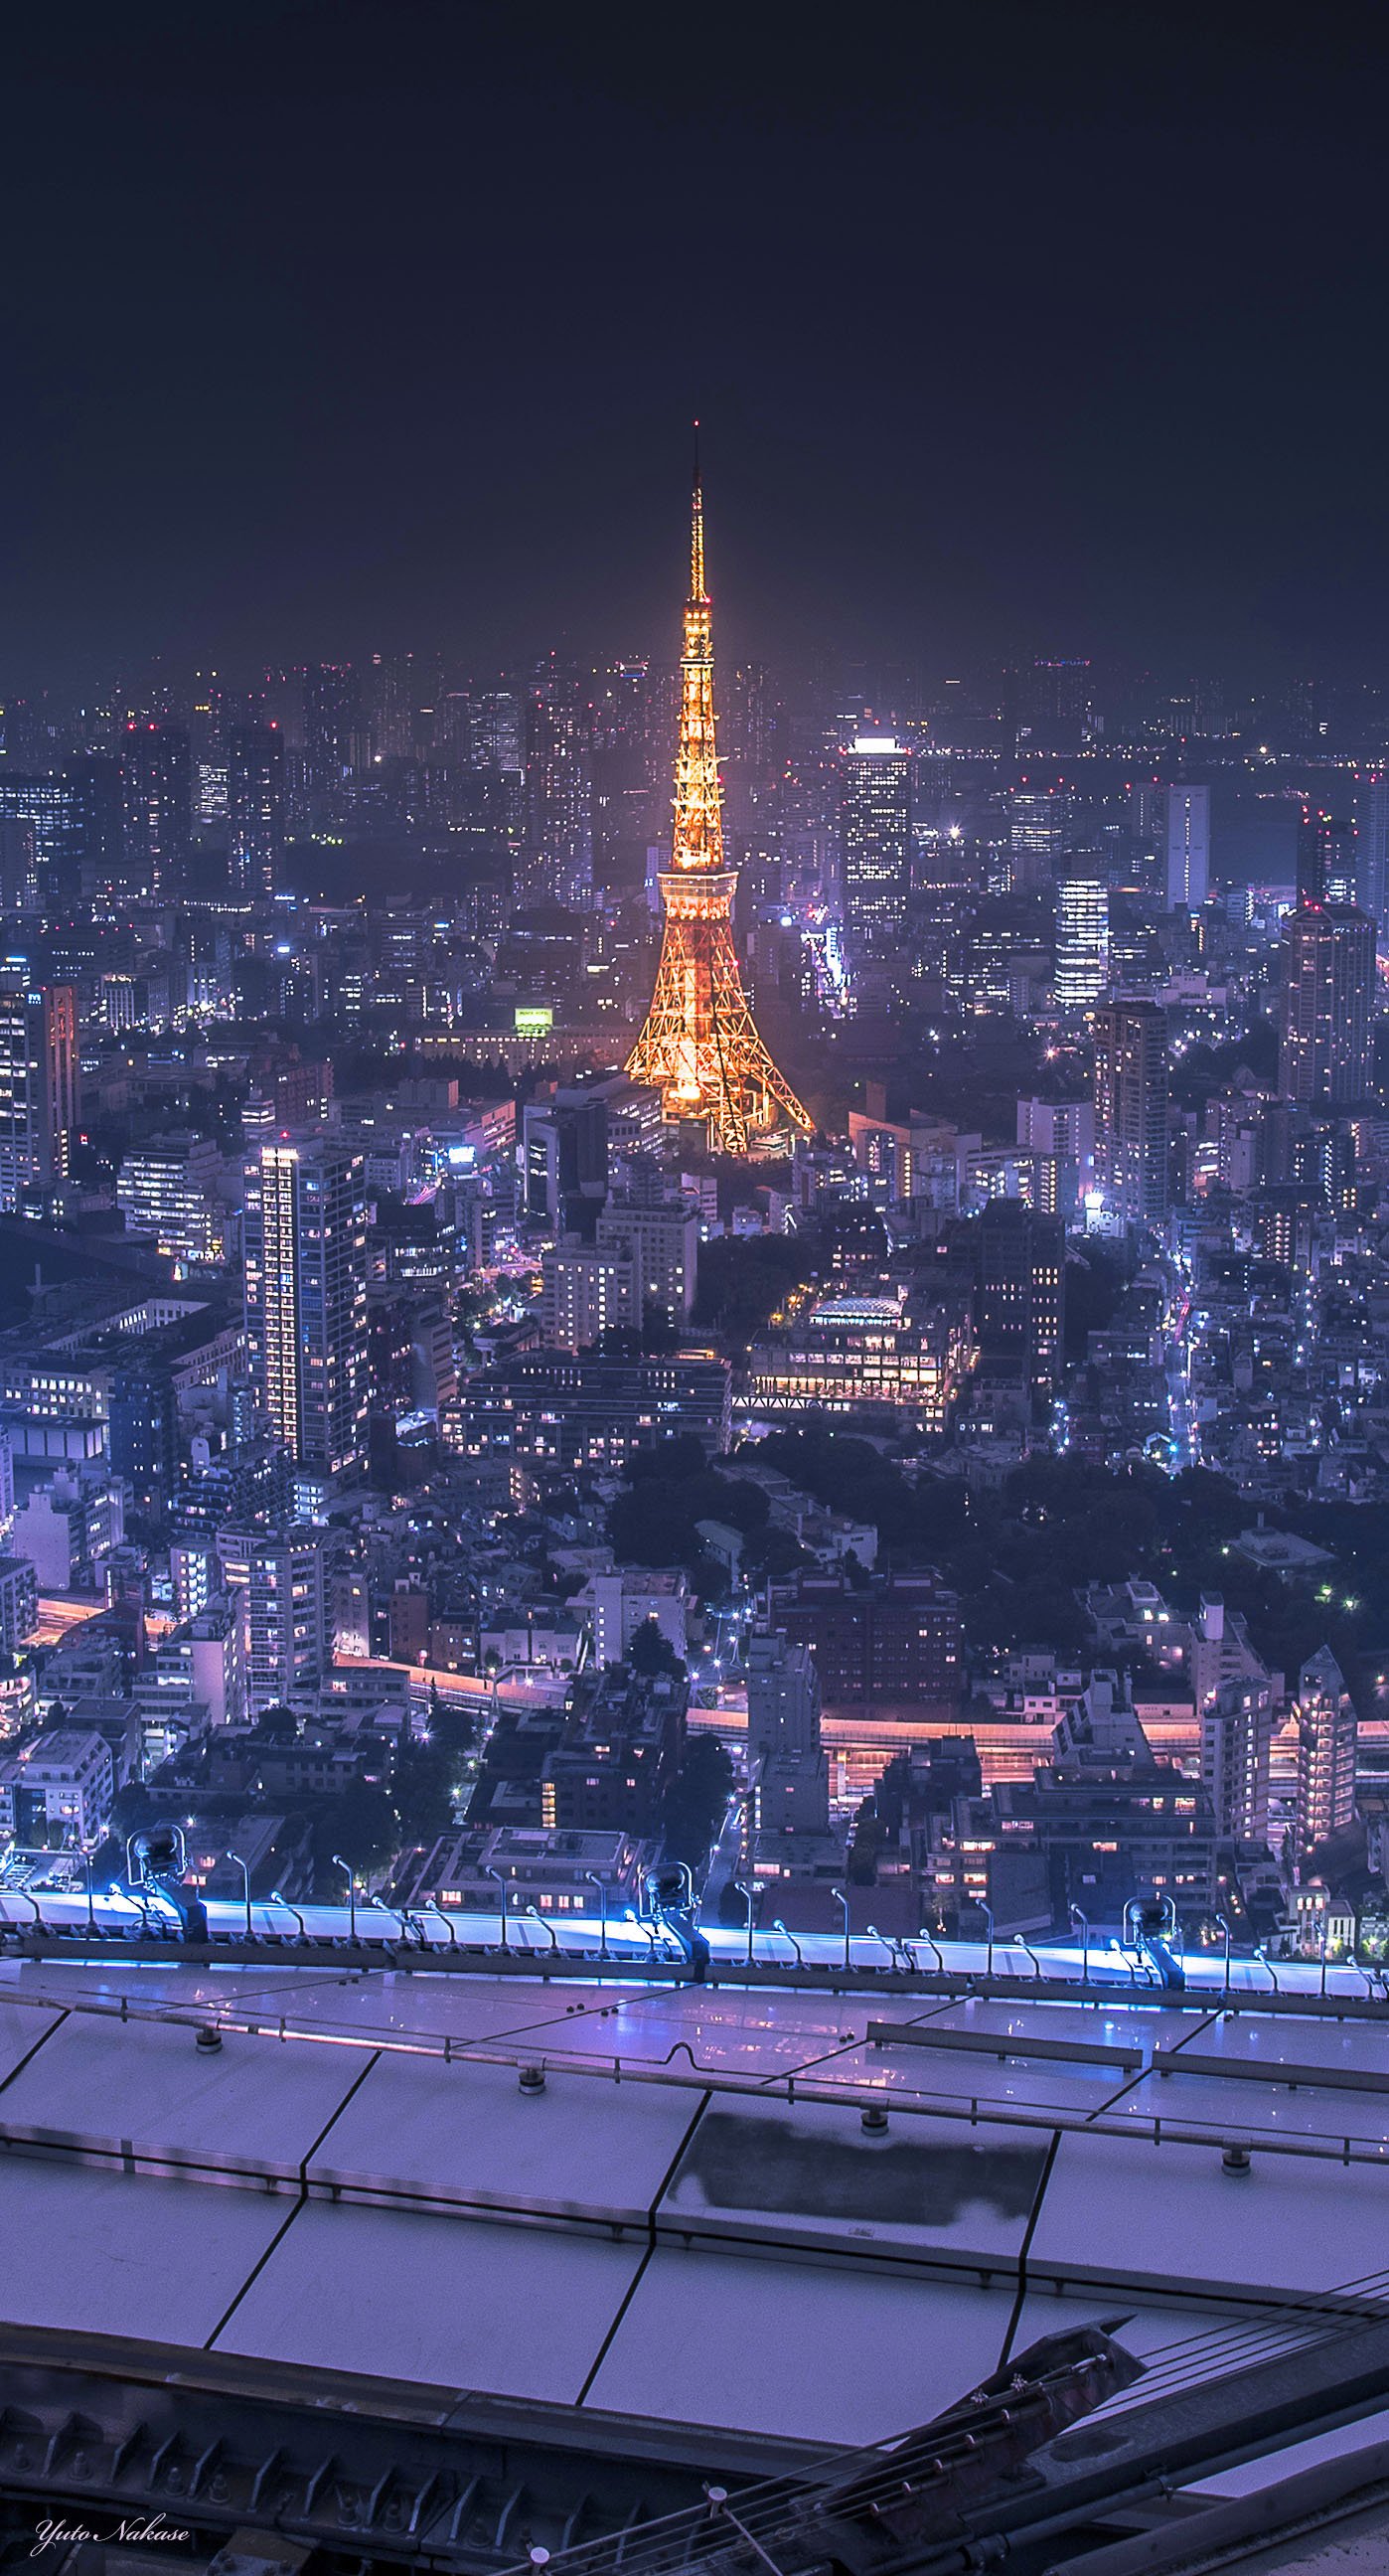 تويتر 中瀬雄登 写真教室 エヌピクチャーズ やってます على تويتر 東京タワー大好きです 六本木ヒルズからと晴海ふ頭からの 夜景です スマホの壁紙として使用できるサイズです Iphone壁紙 ニッポンを撮る 東京タワー 六本木ヒルズ 晴海ふ頭 夜景